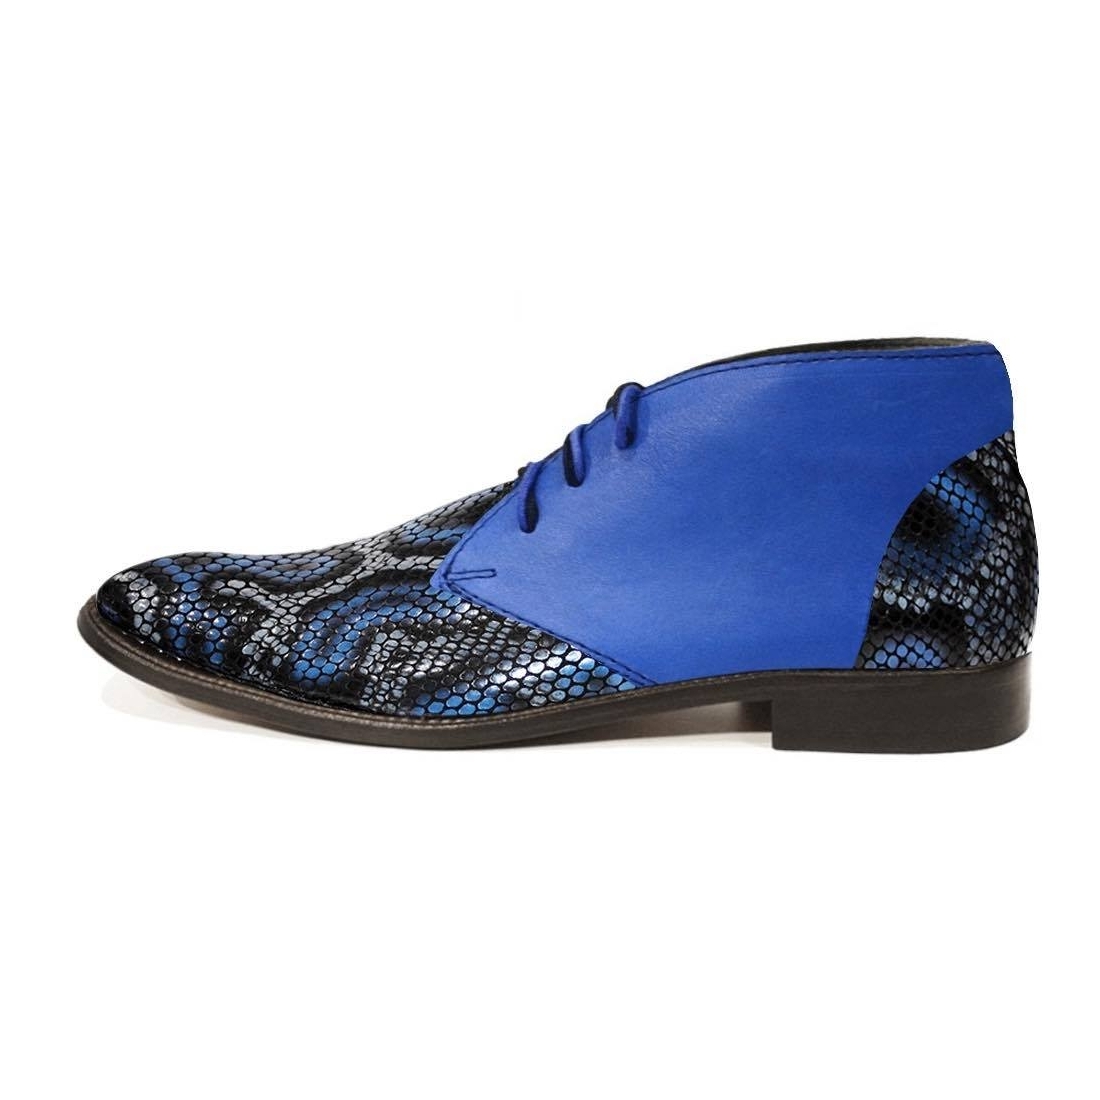 Modello Serpentto -  Chukka Stiefel - Handmade Colorful Italian Leather Shoes